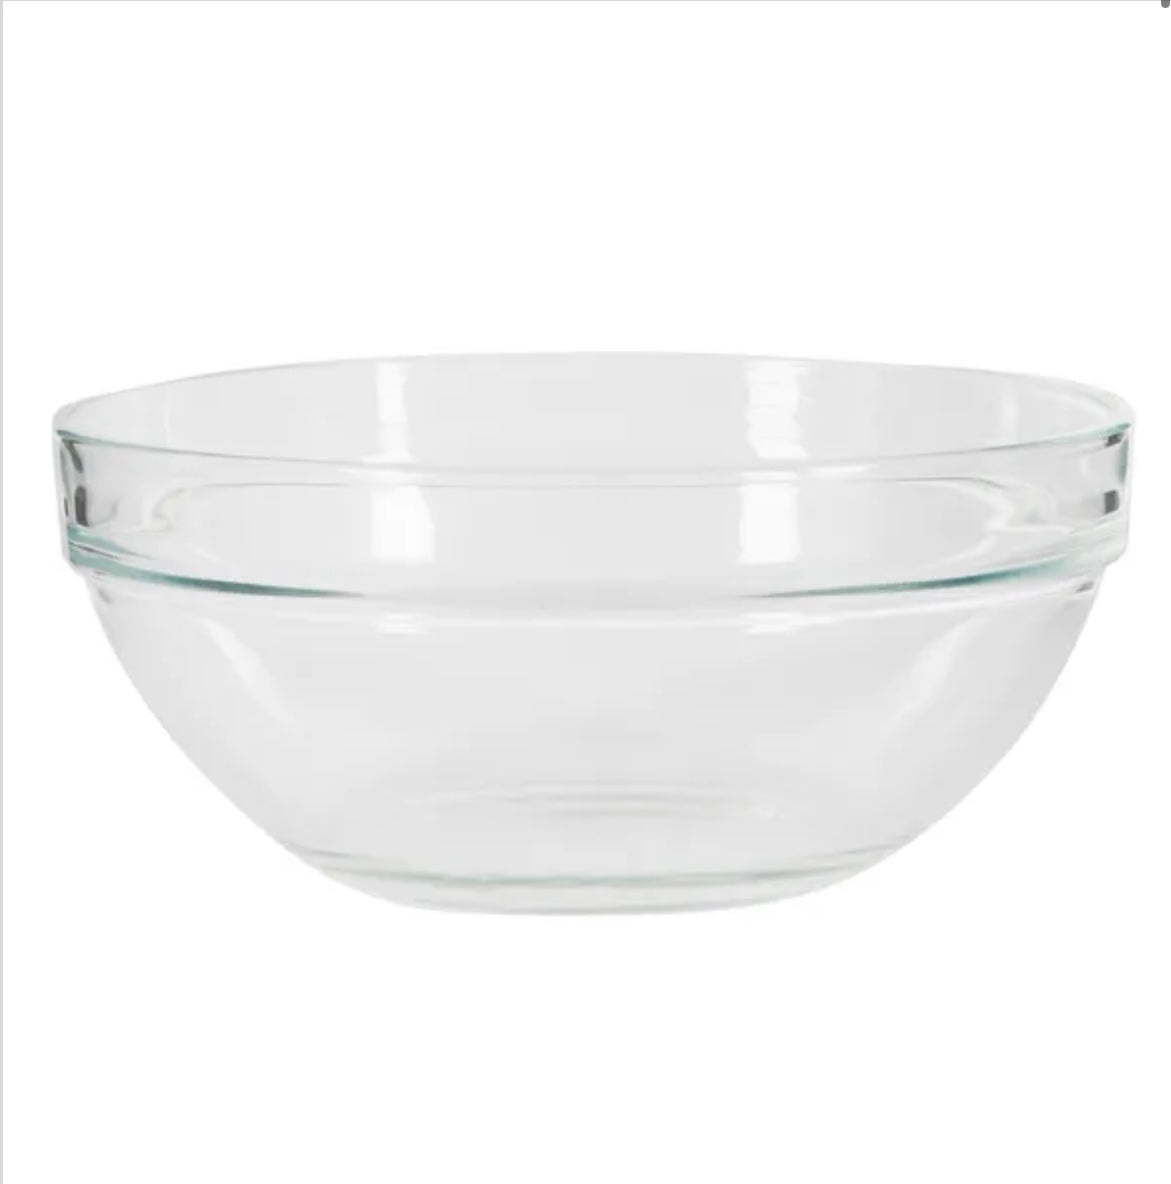 20cm round bowl